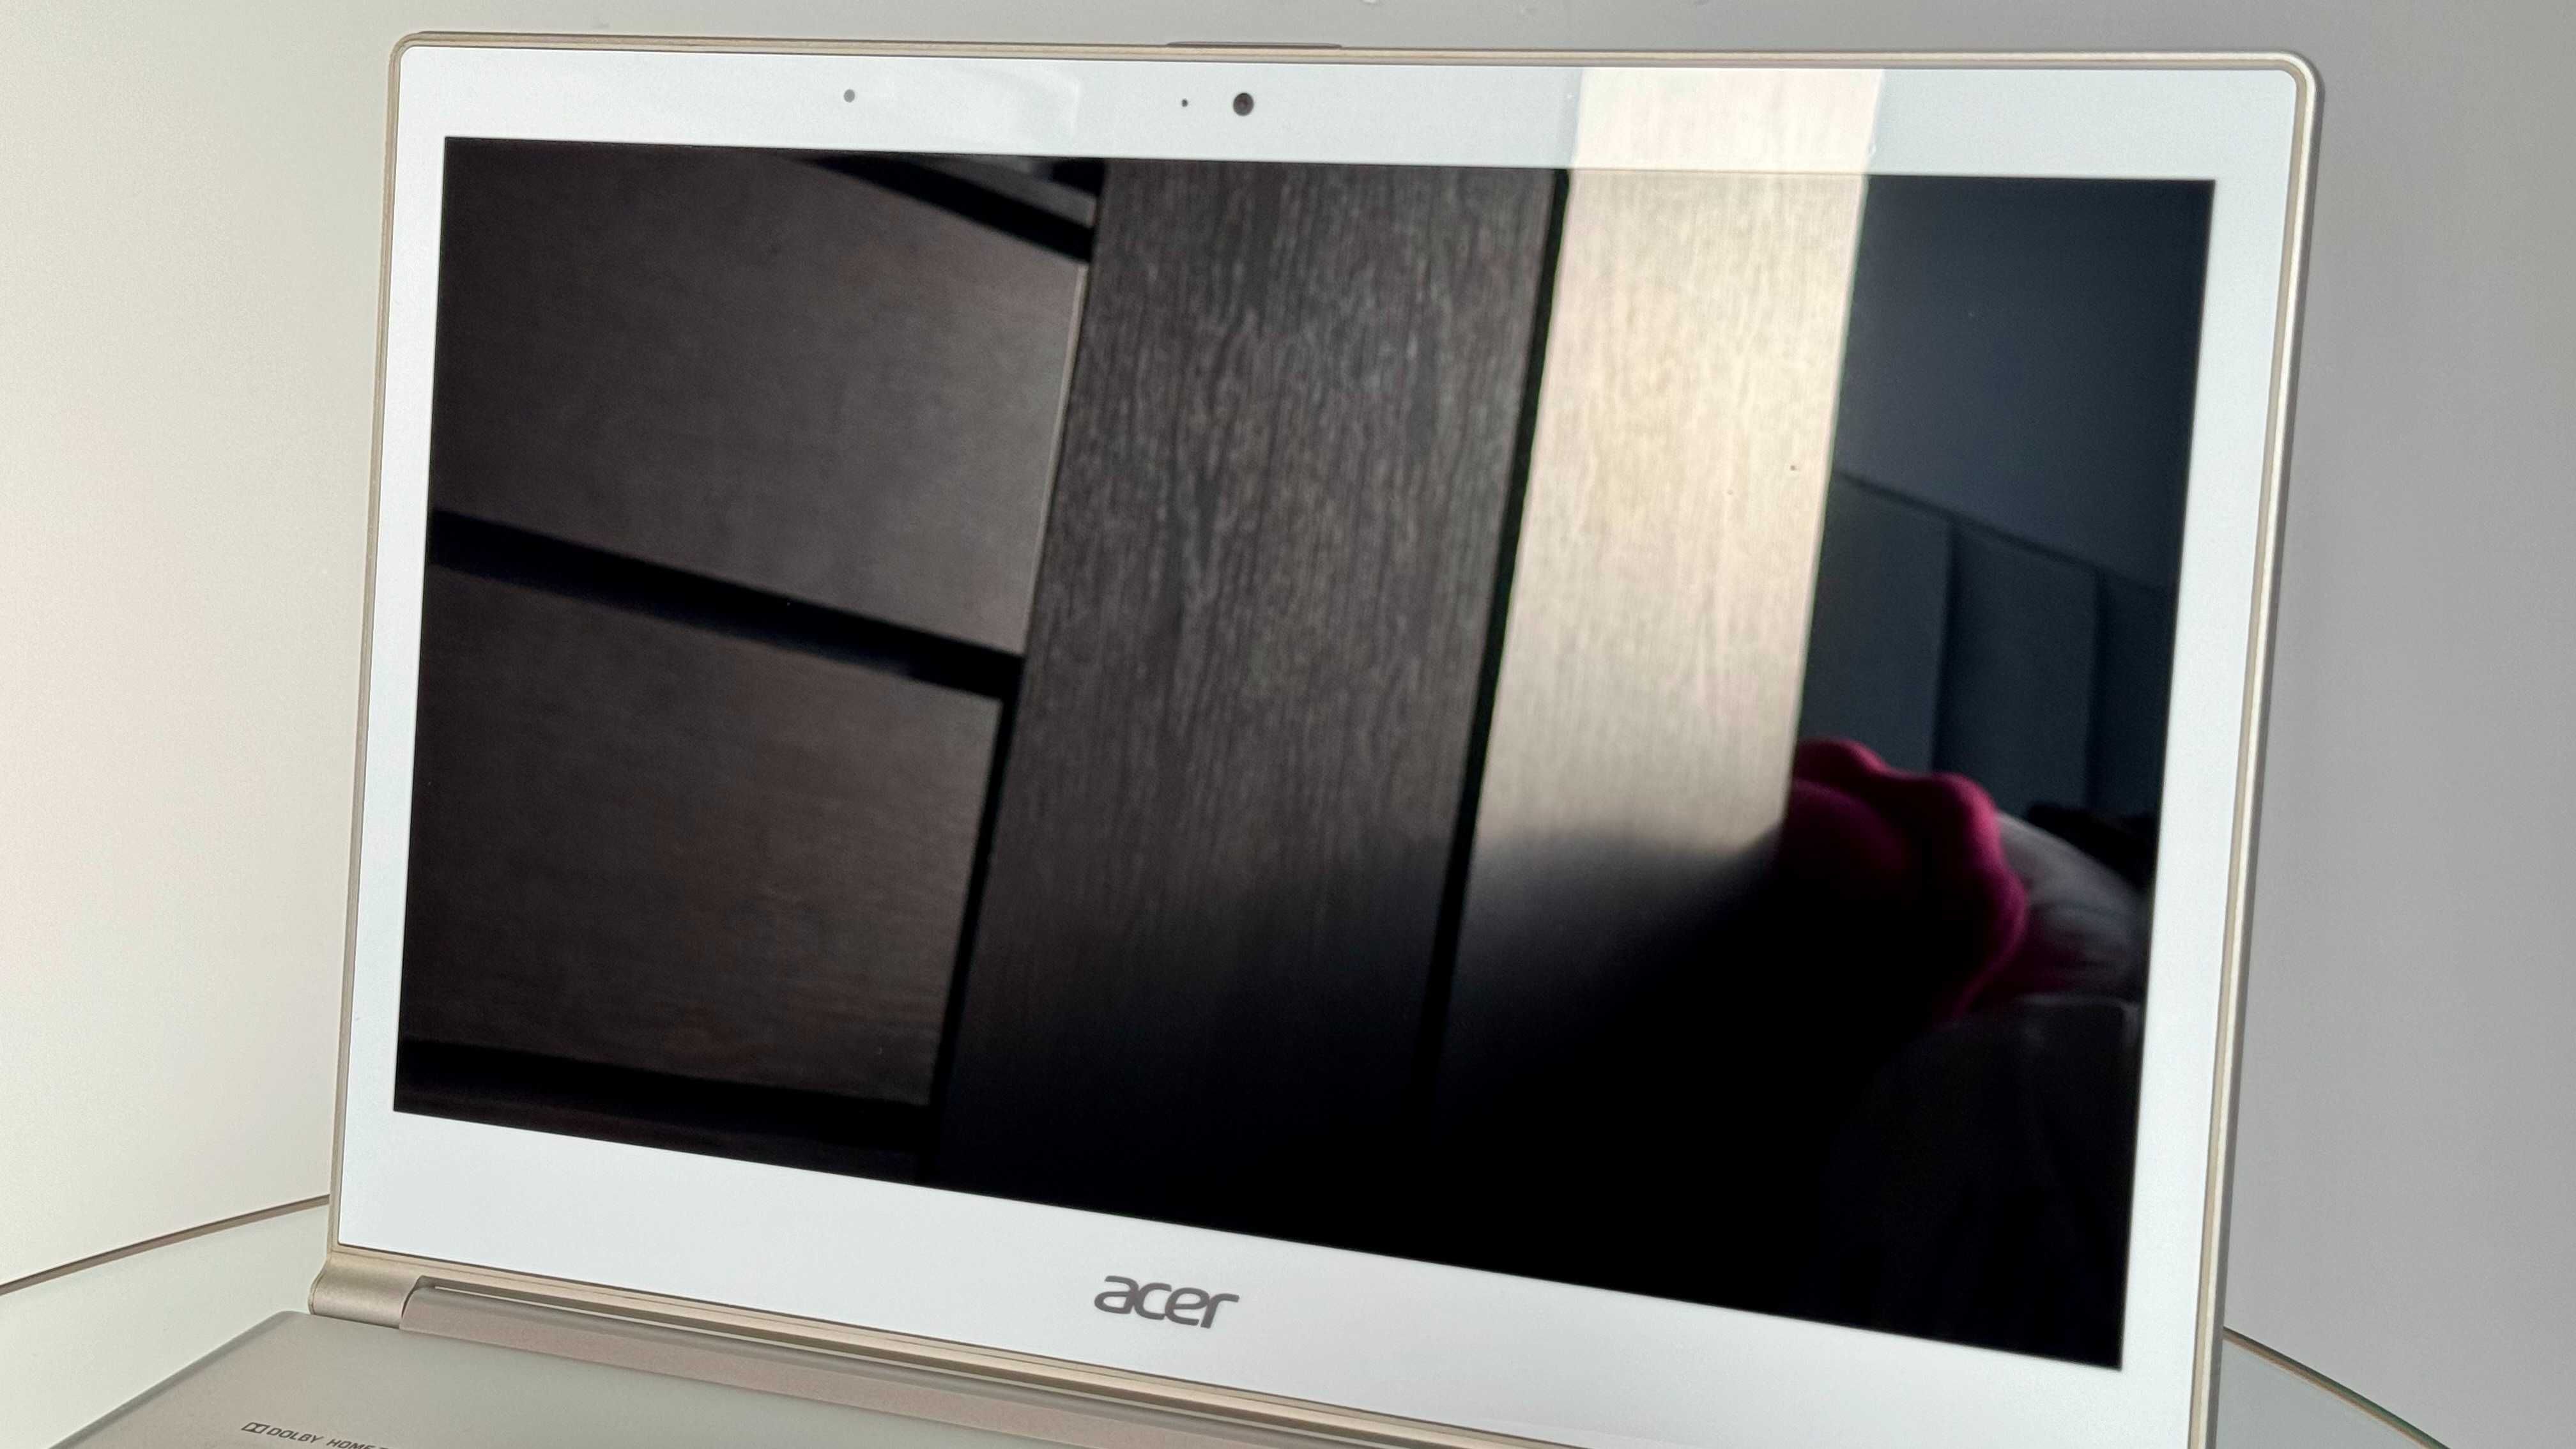 Unikat Acer Aspire S7-391 i7-3517U 4GB 256GB mSATA Stan kolekcjonerski